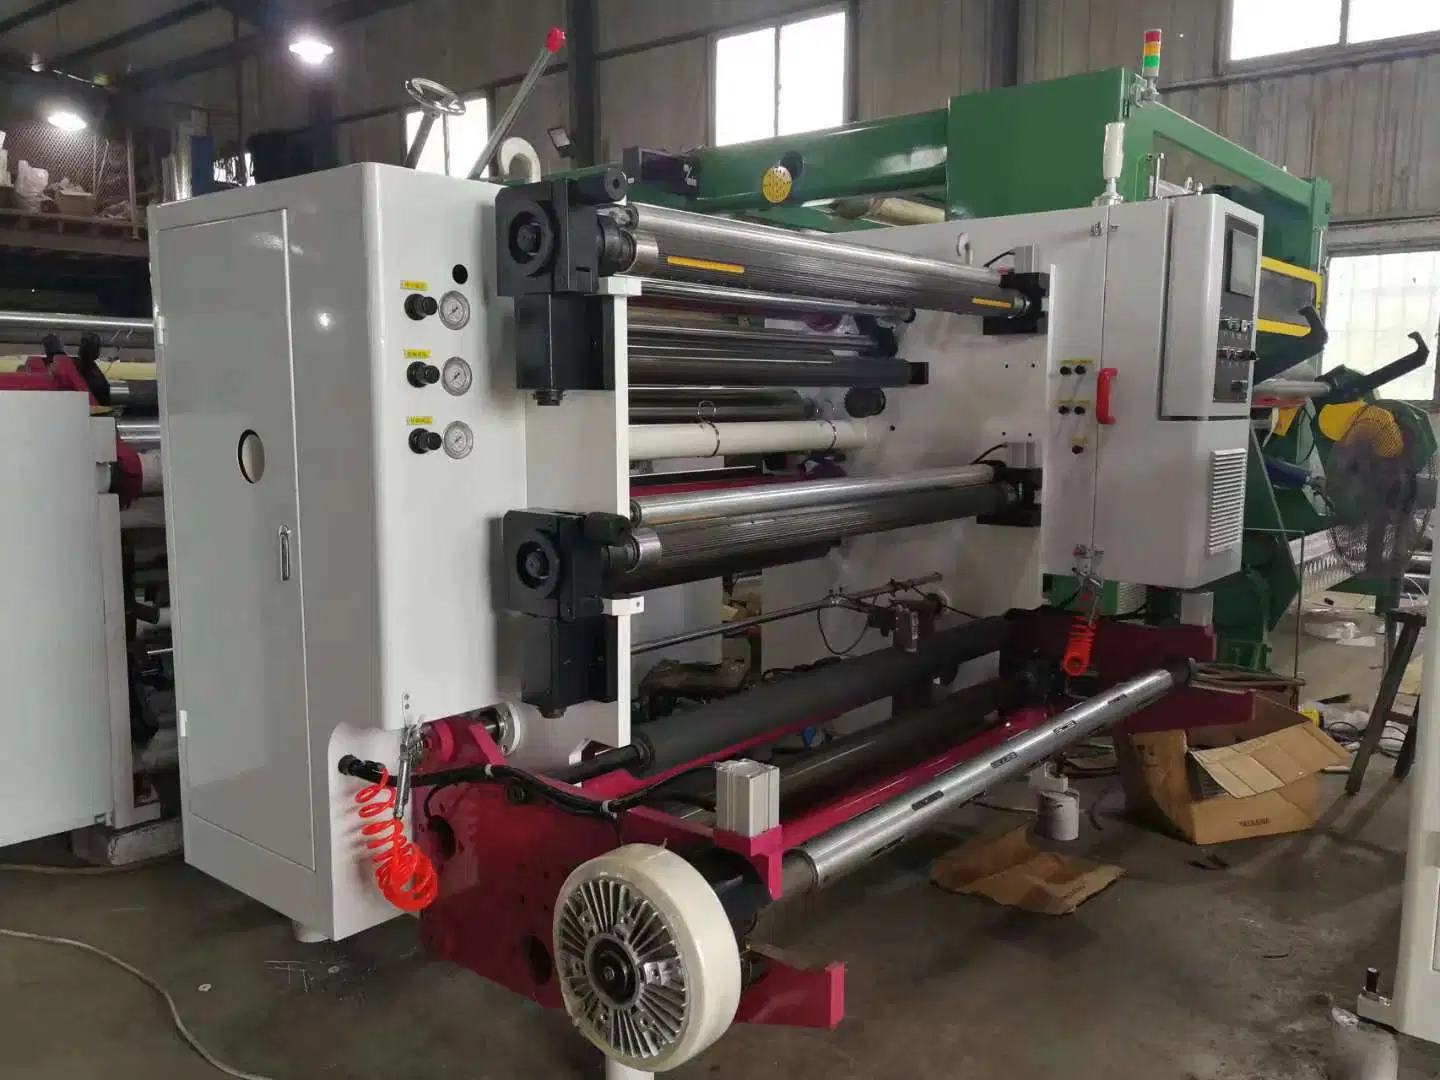 Perfect Workmanship POS Thermal Paper Roll Cutting Slitting Machine